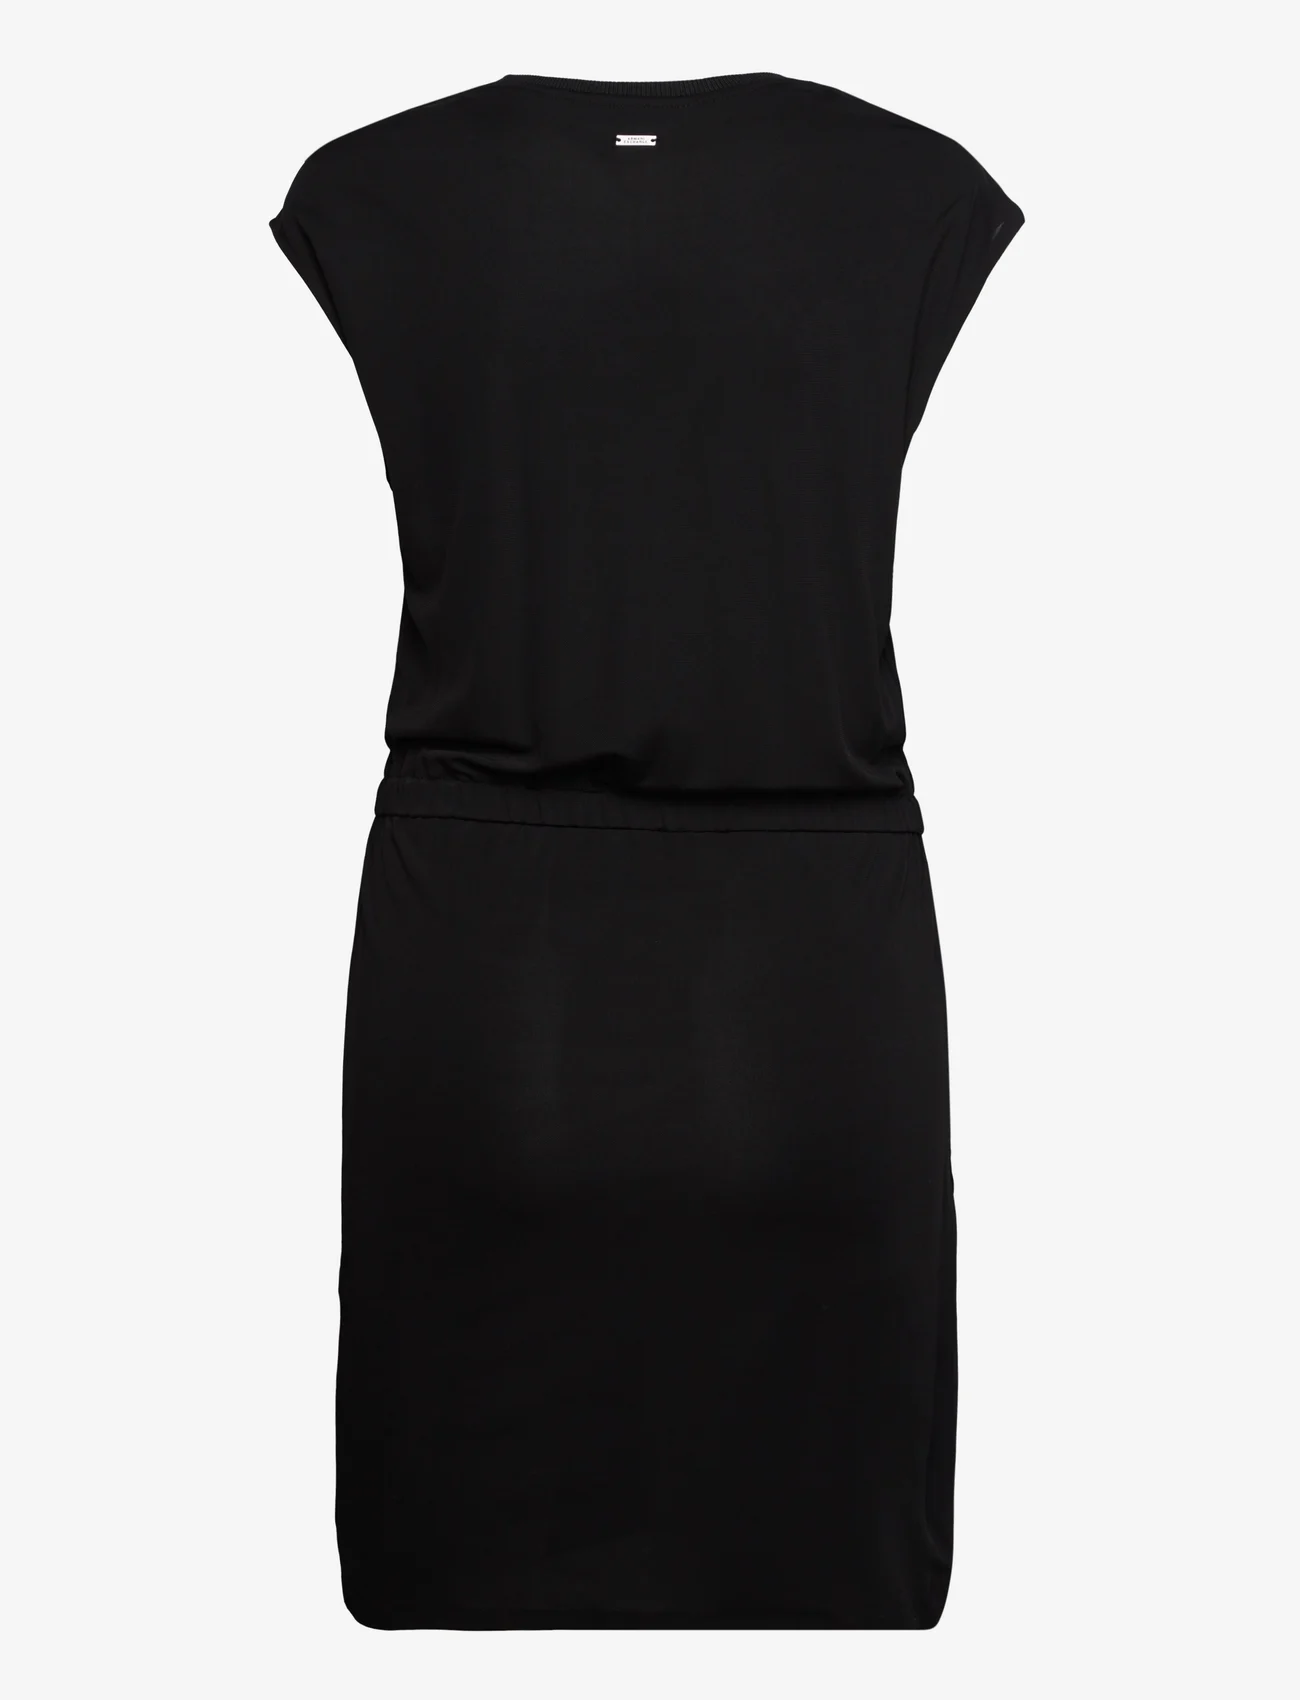 Armani Exchange - DRESS - t-skjortekjoler - 1200-black - 1